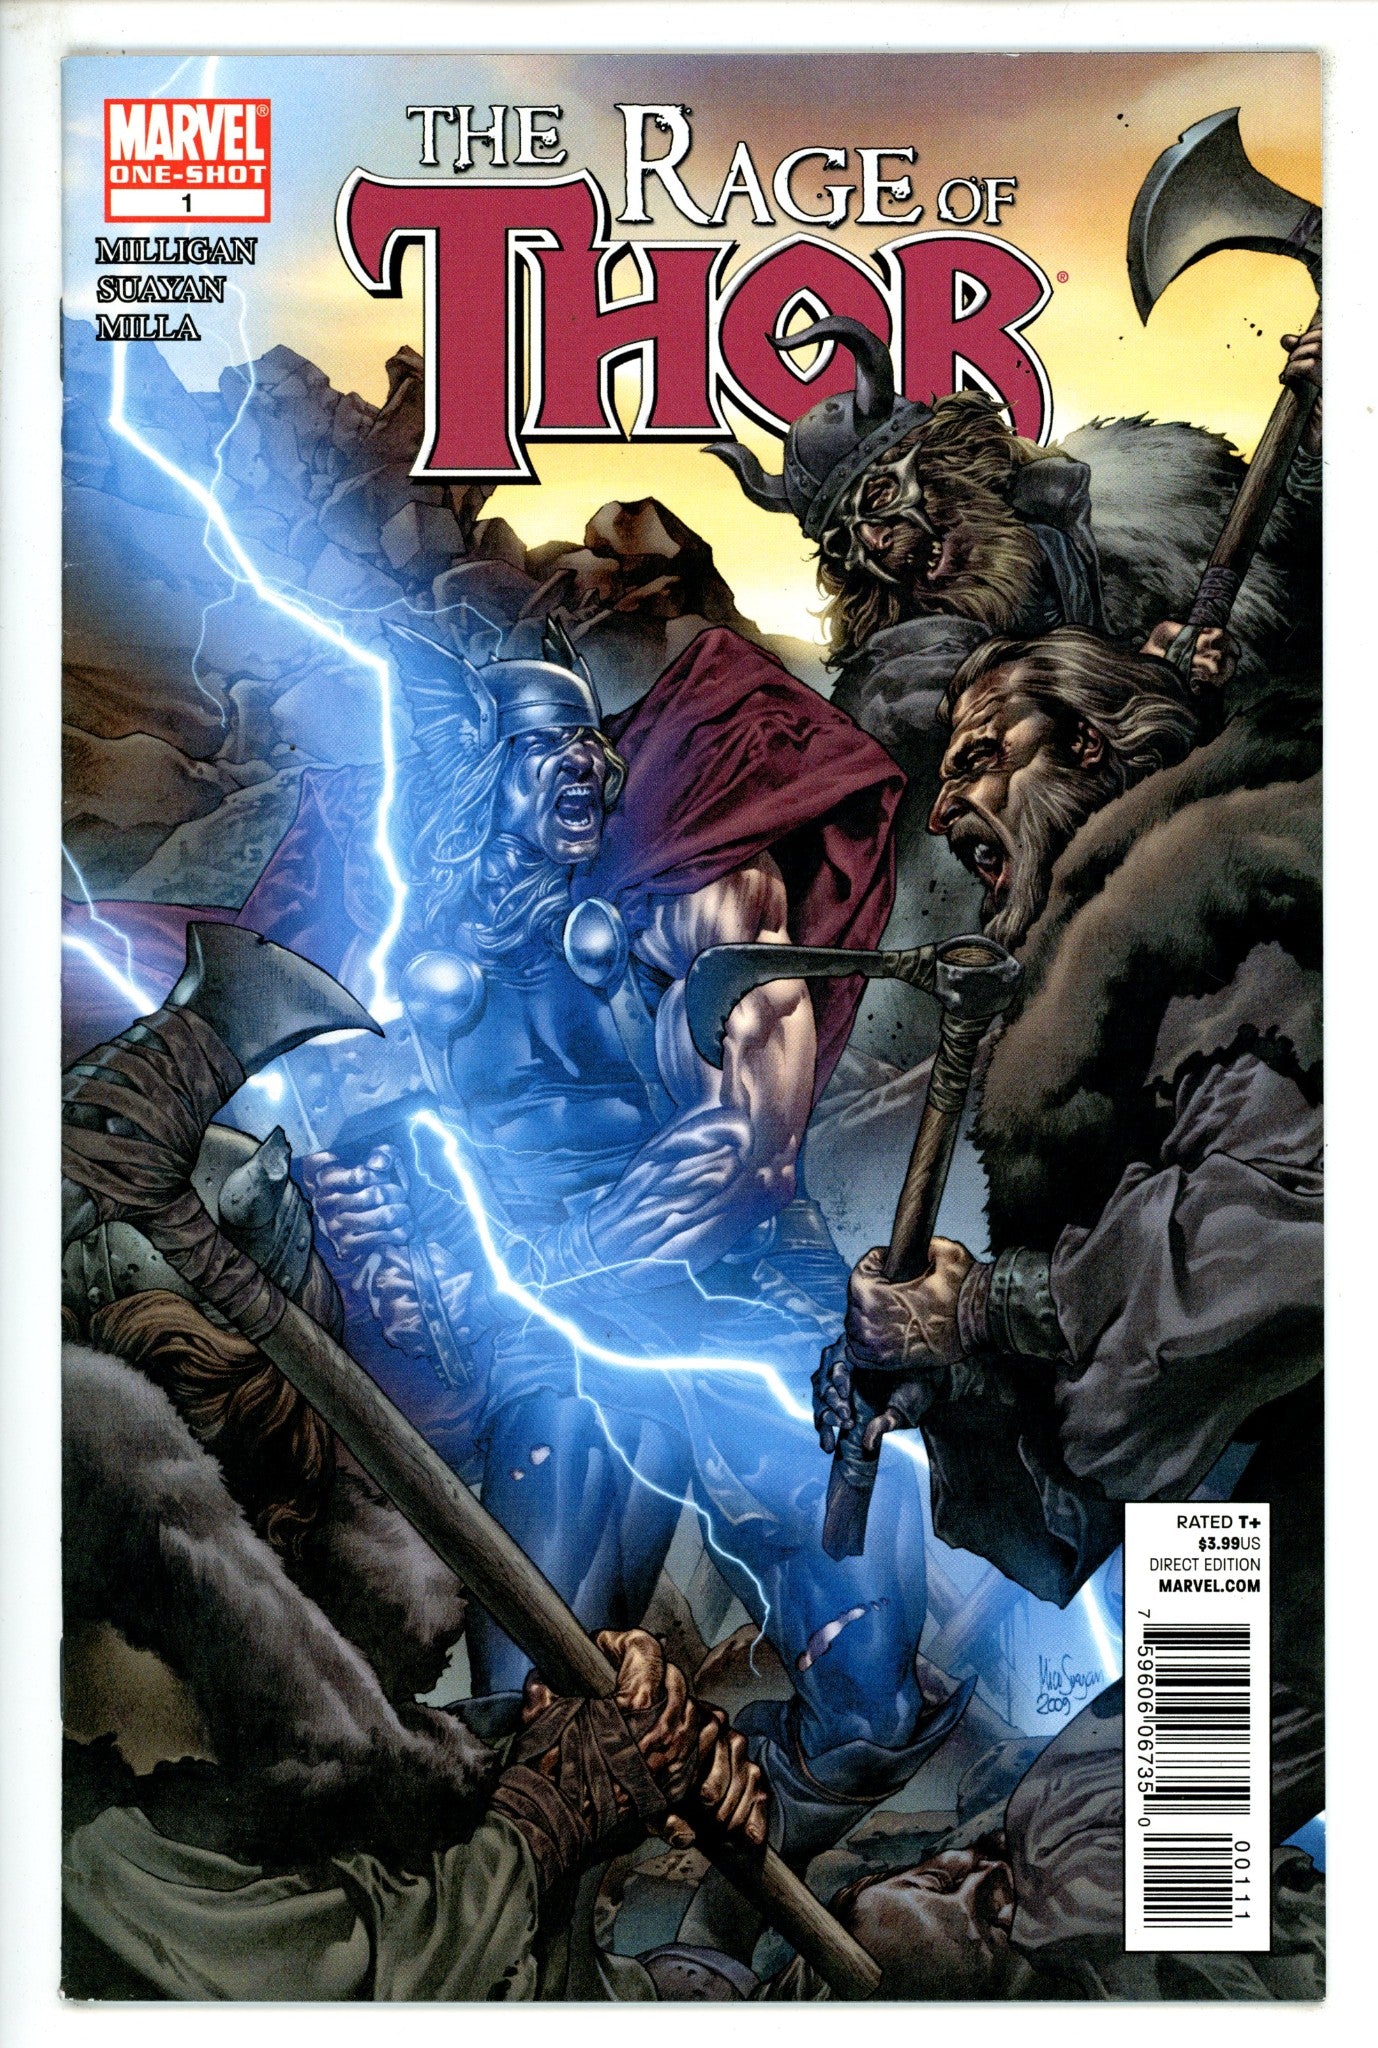 Thor: The Rage of Thor 1 (2010)